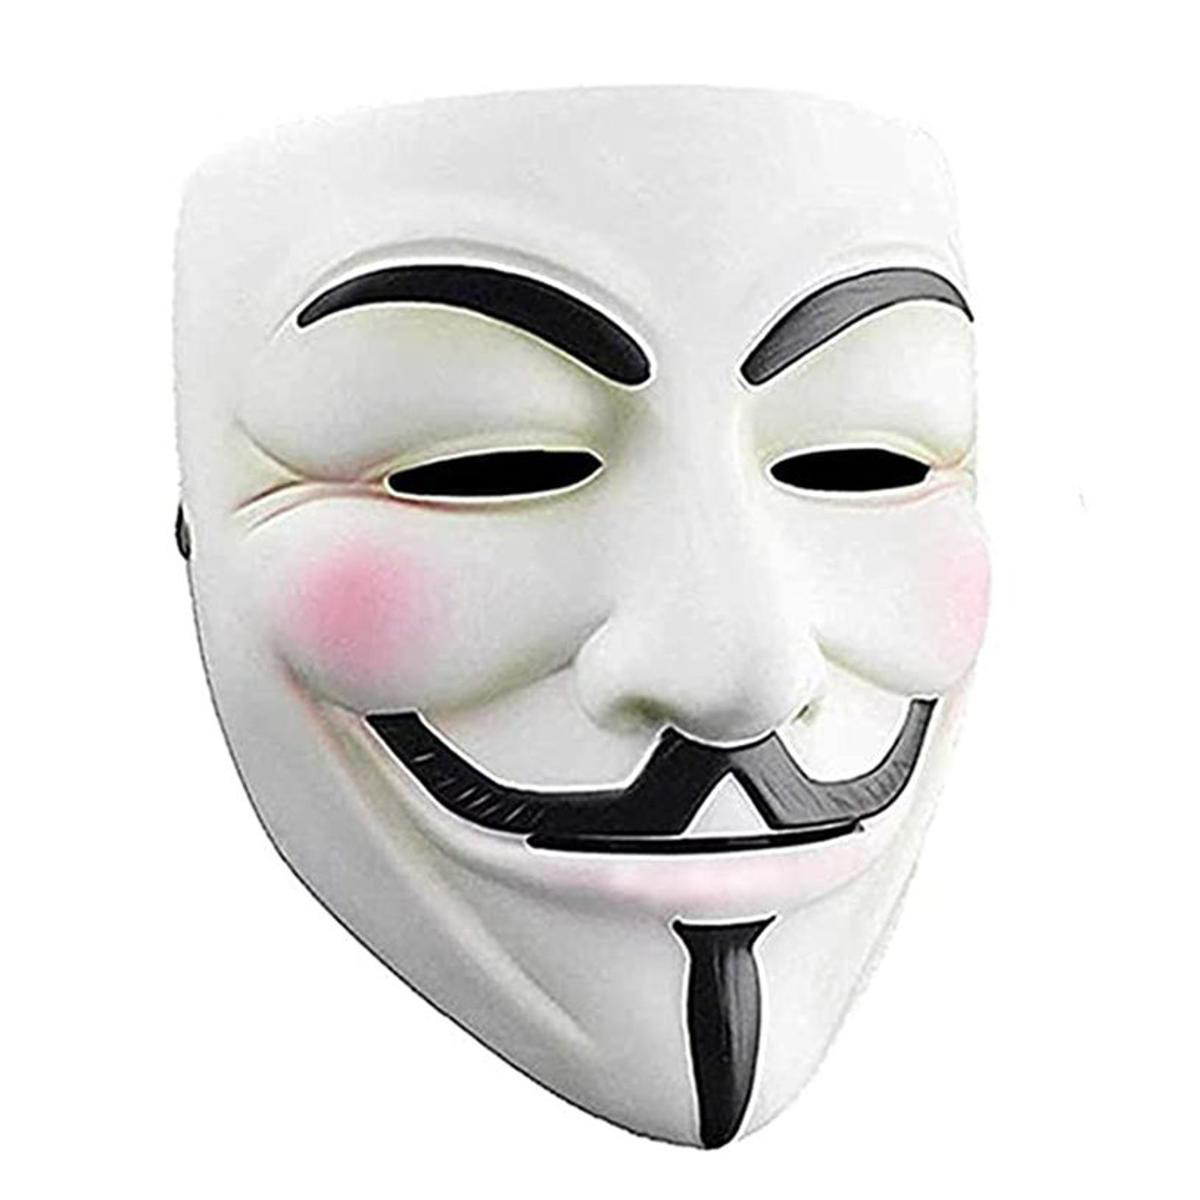 anonymous mask meme